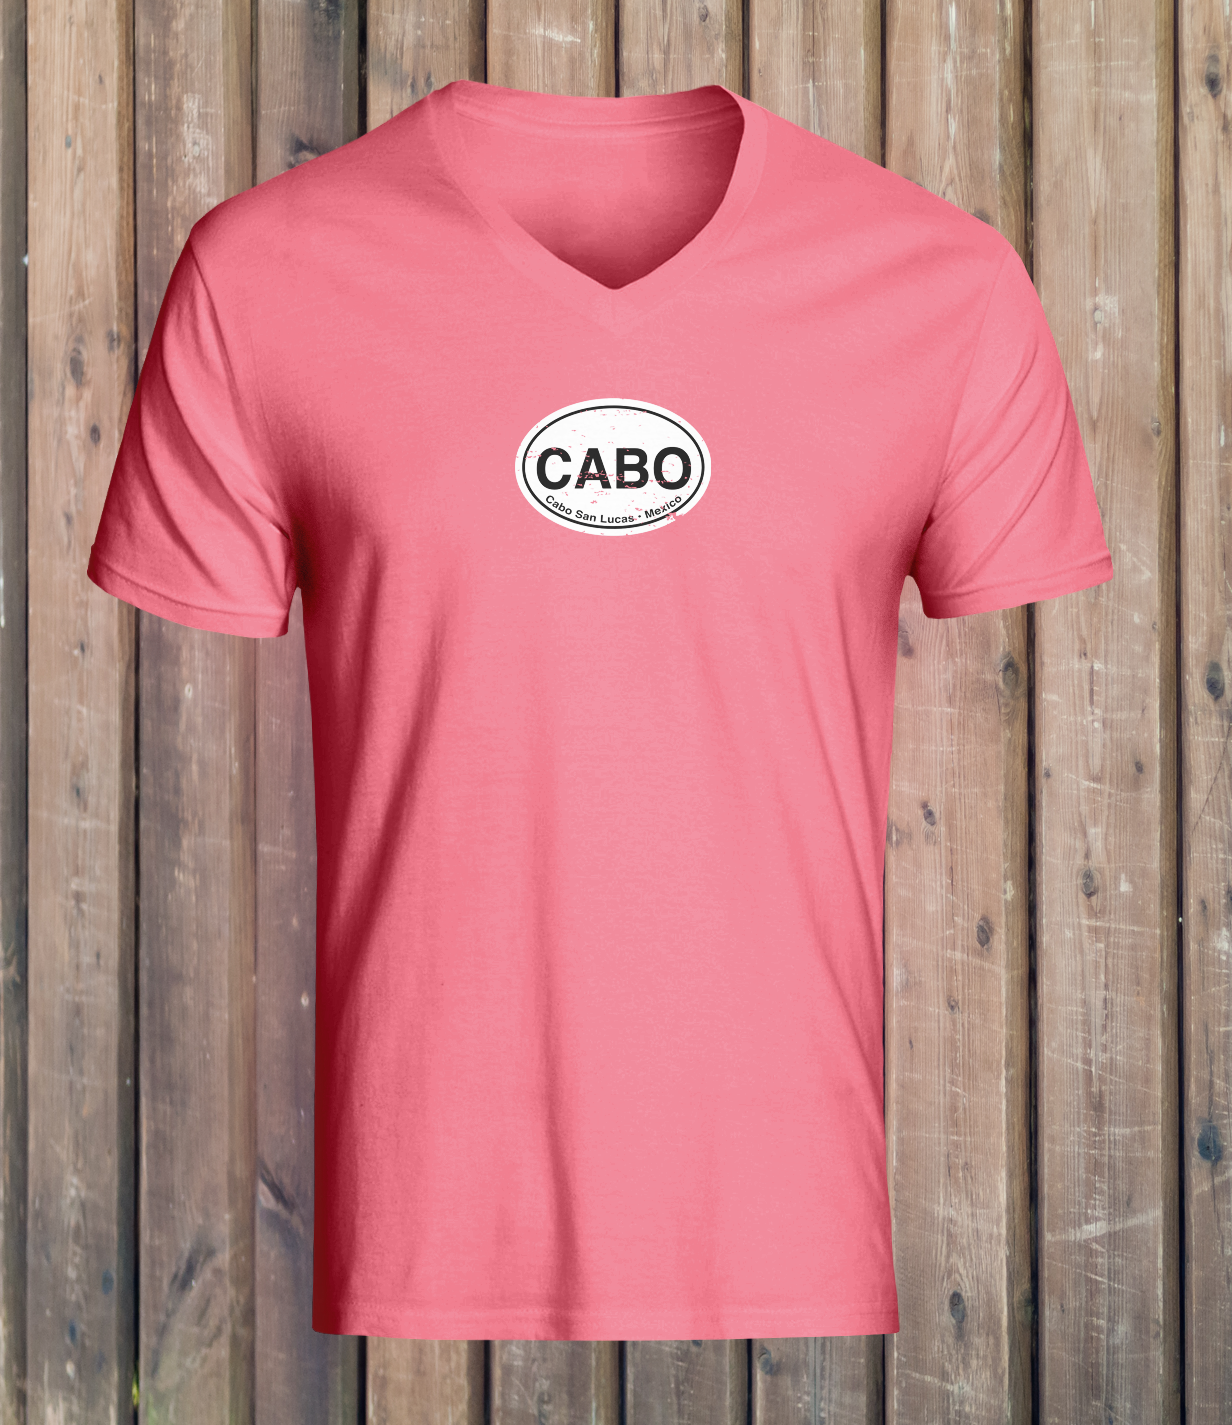 Cabo Women's Classic V-Neck T-Shirts - My Destination Location